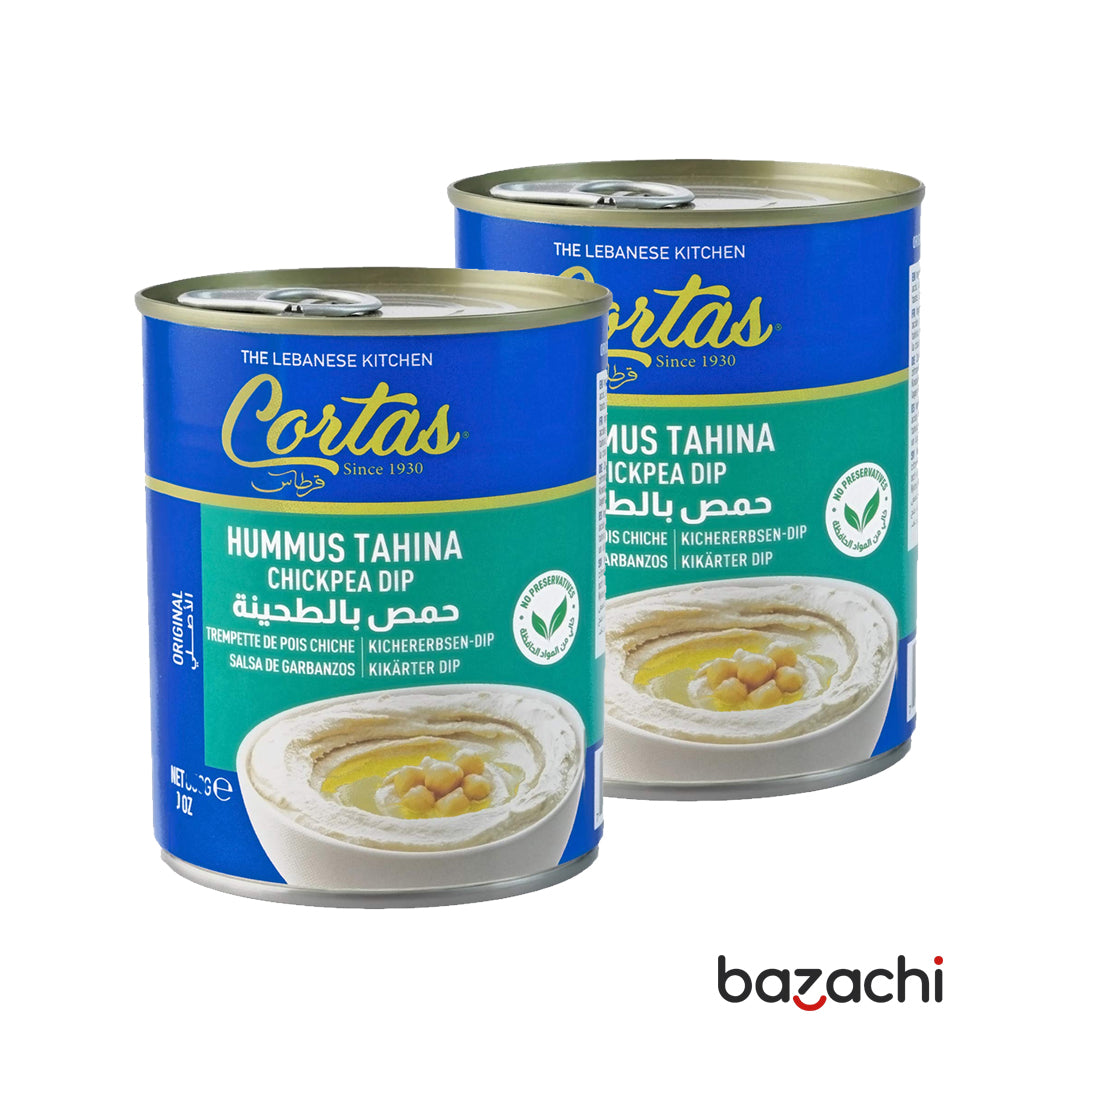 Cortas Hummus Tahina Chick Pea Dip 400g -Reasy to Eat